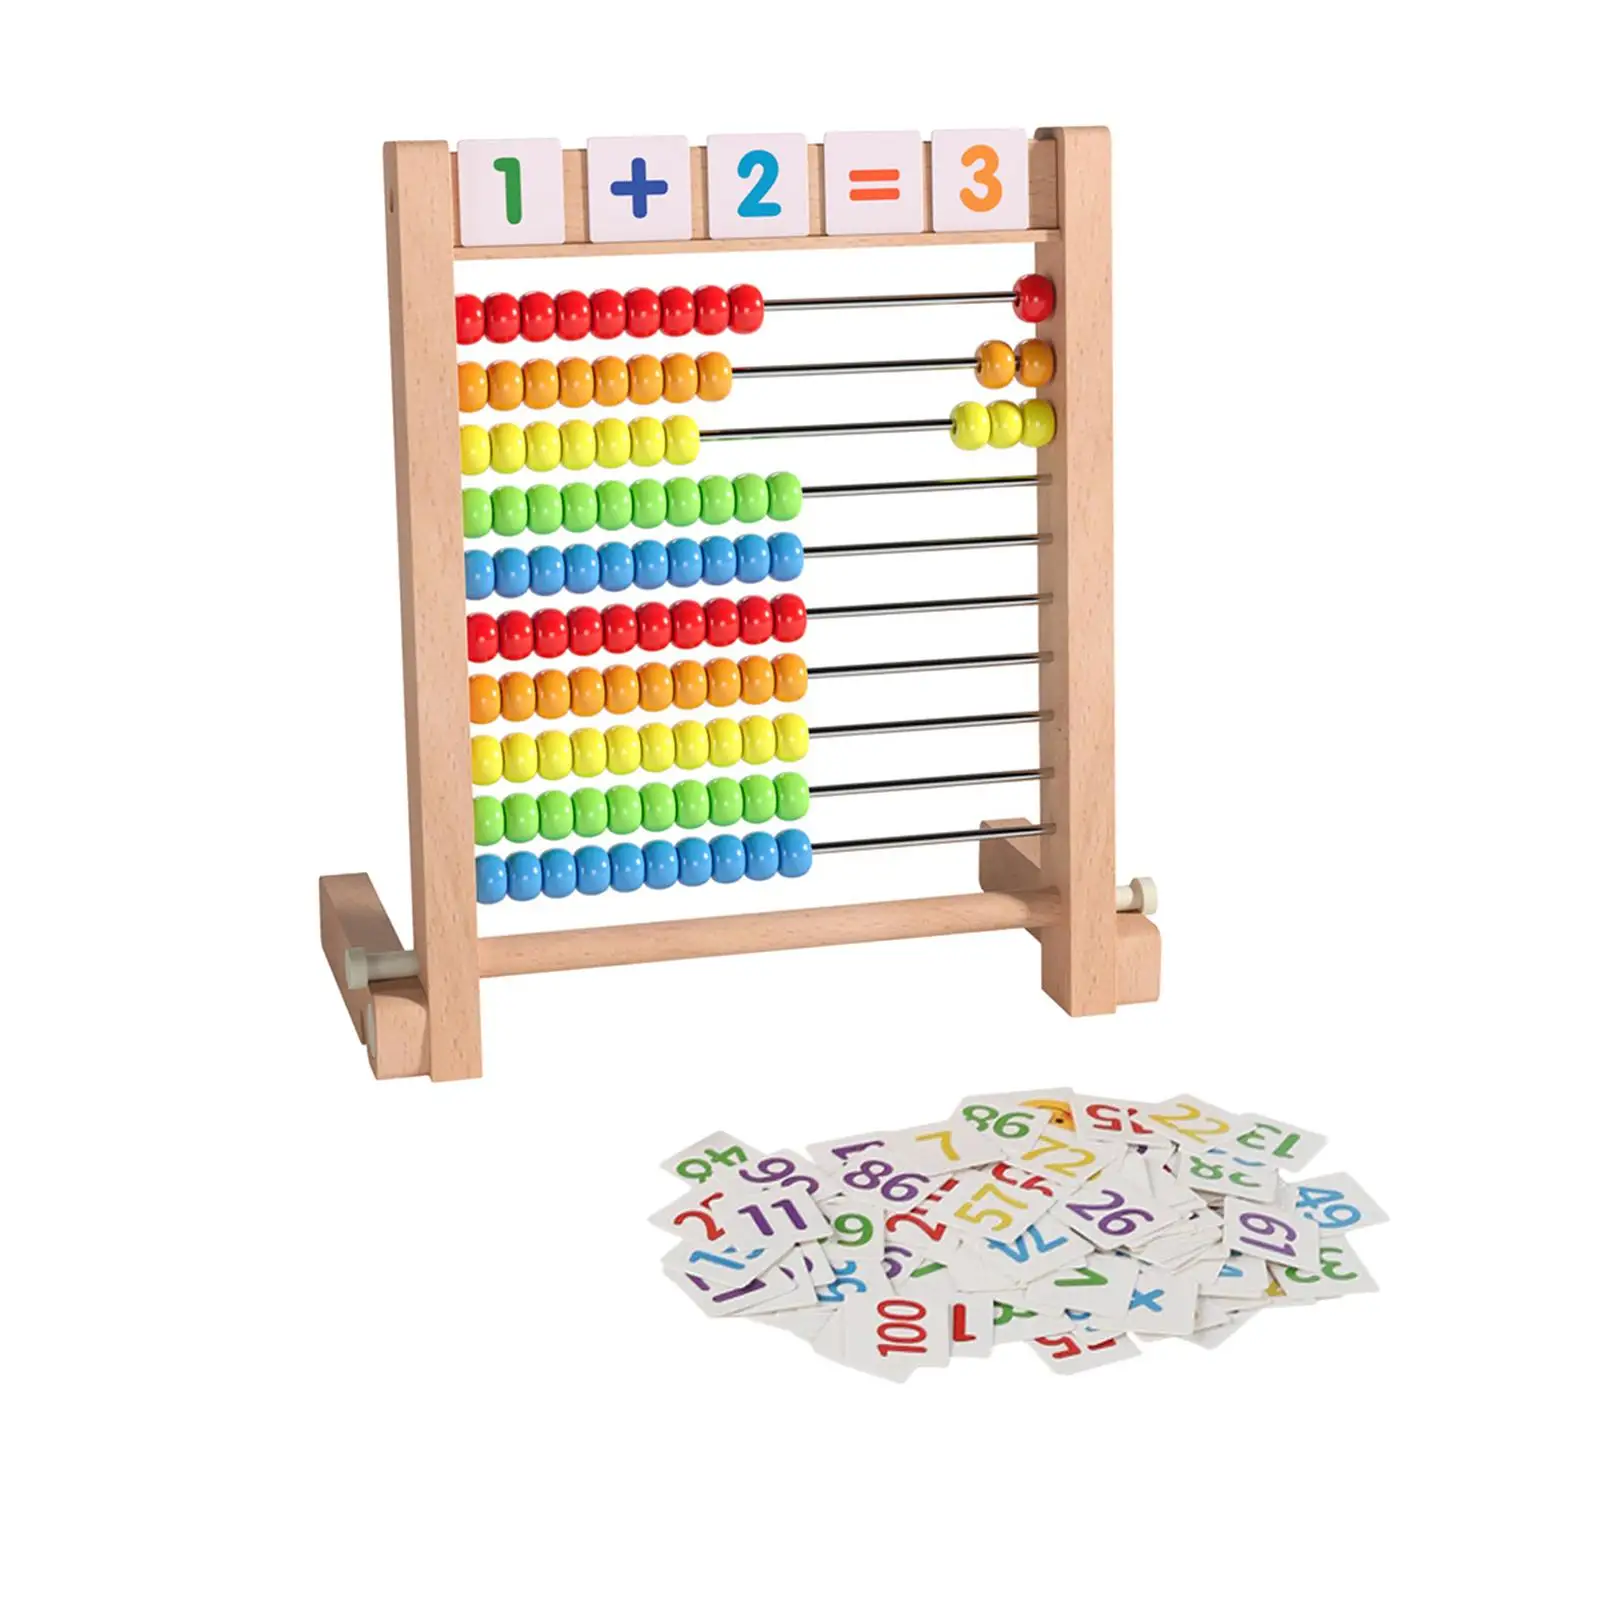 Classic Wooden Abacus Ten Frame Set with Number Cards Math Manipulatives for Boy Girls Kids Kindergarten Elementary Preschool